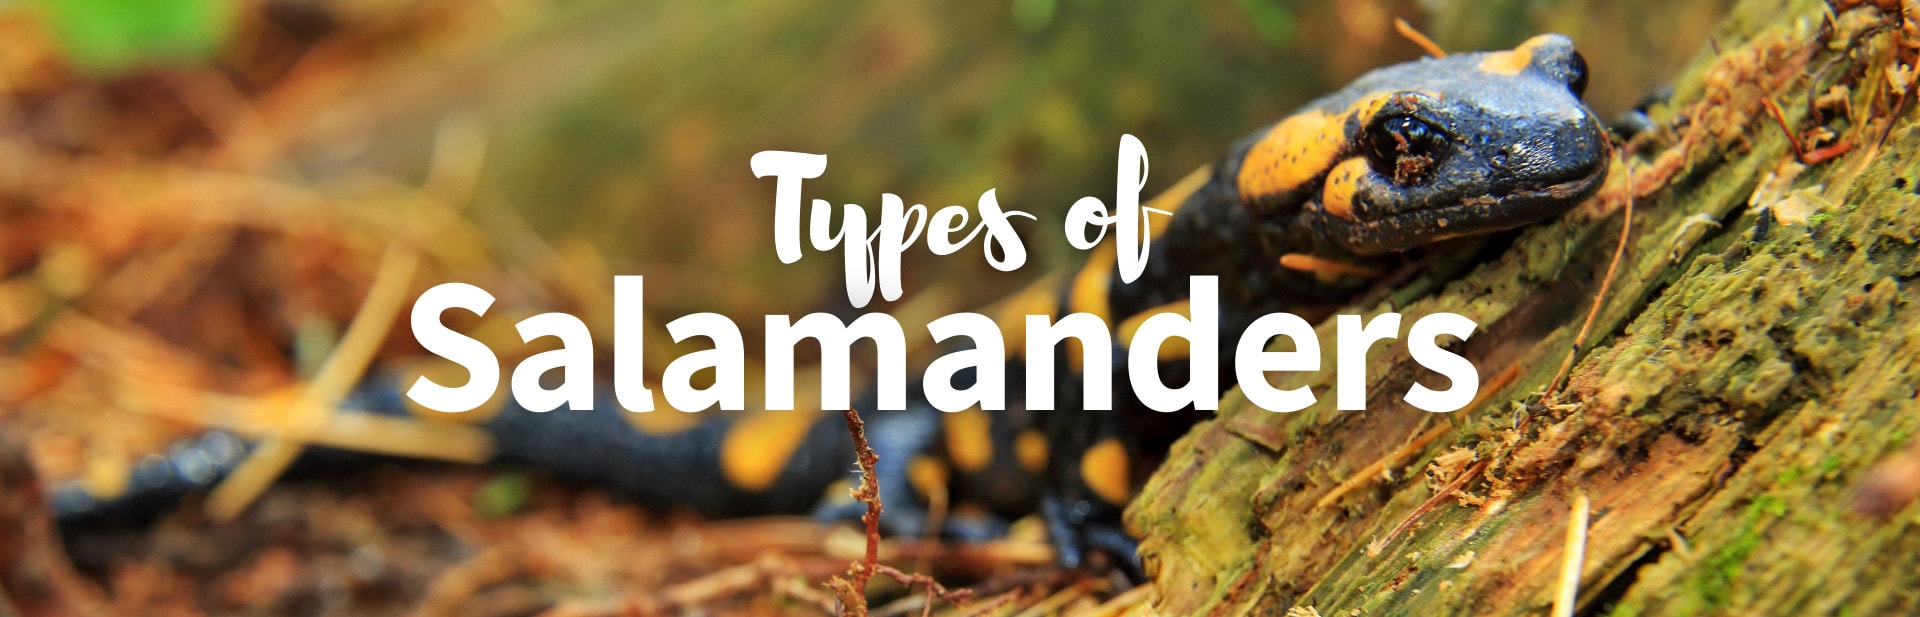 16 Different Types of Salamanders: Ultimate Salamanders Field Guide